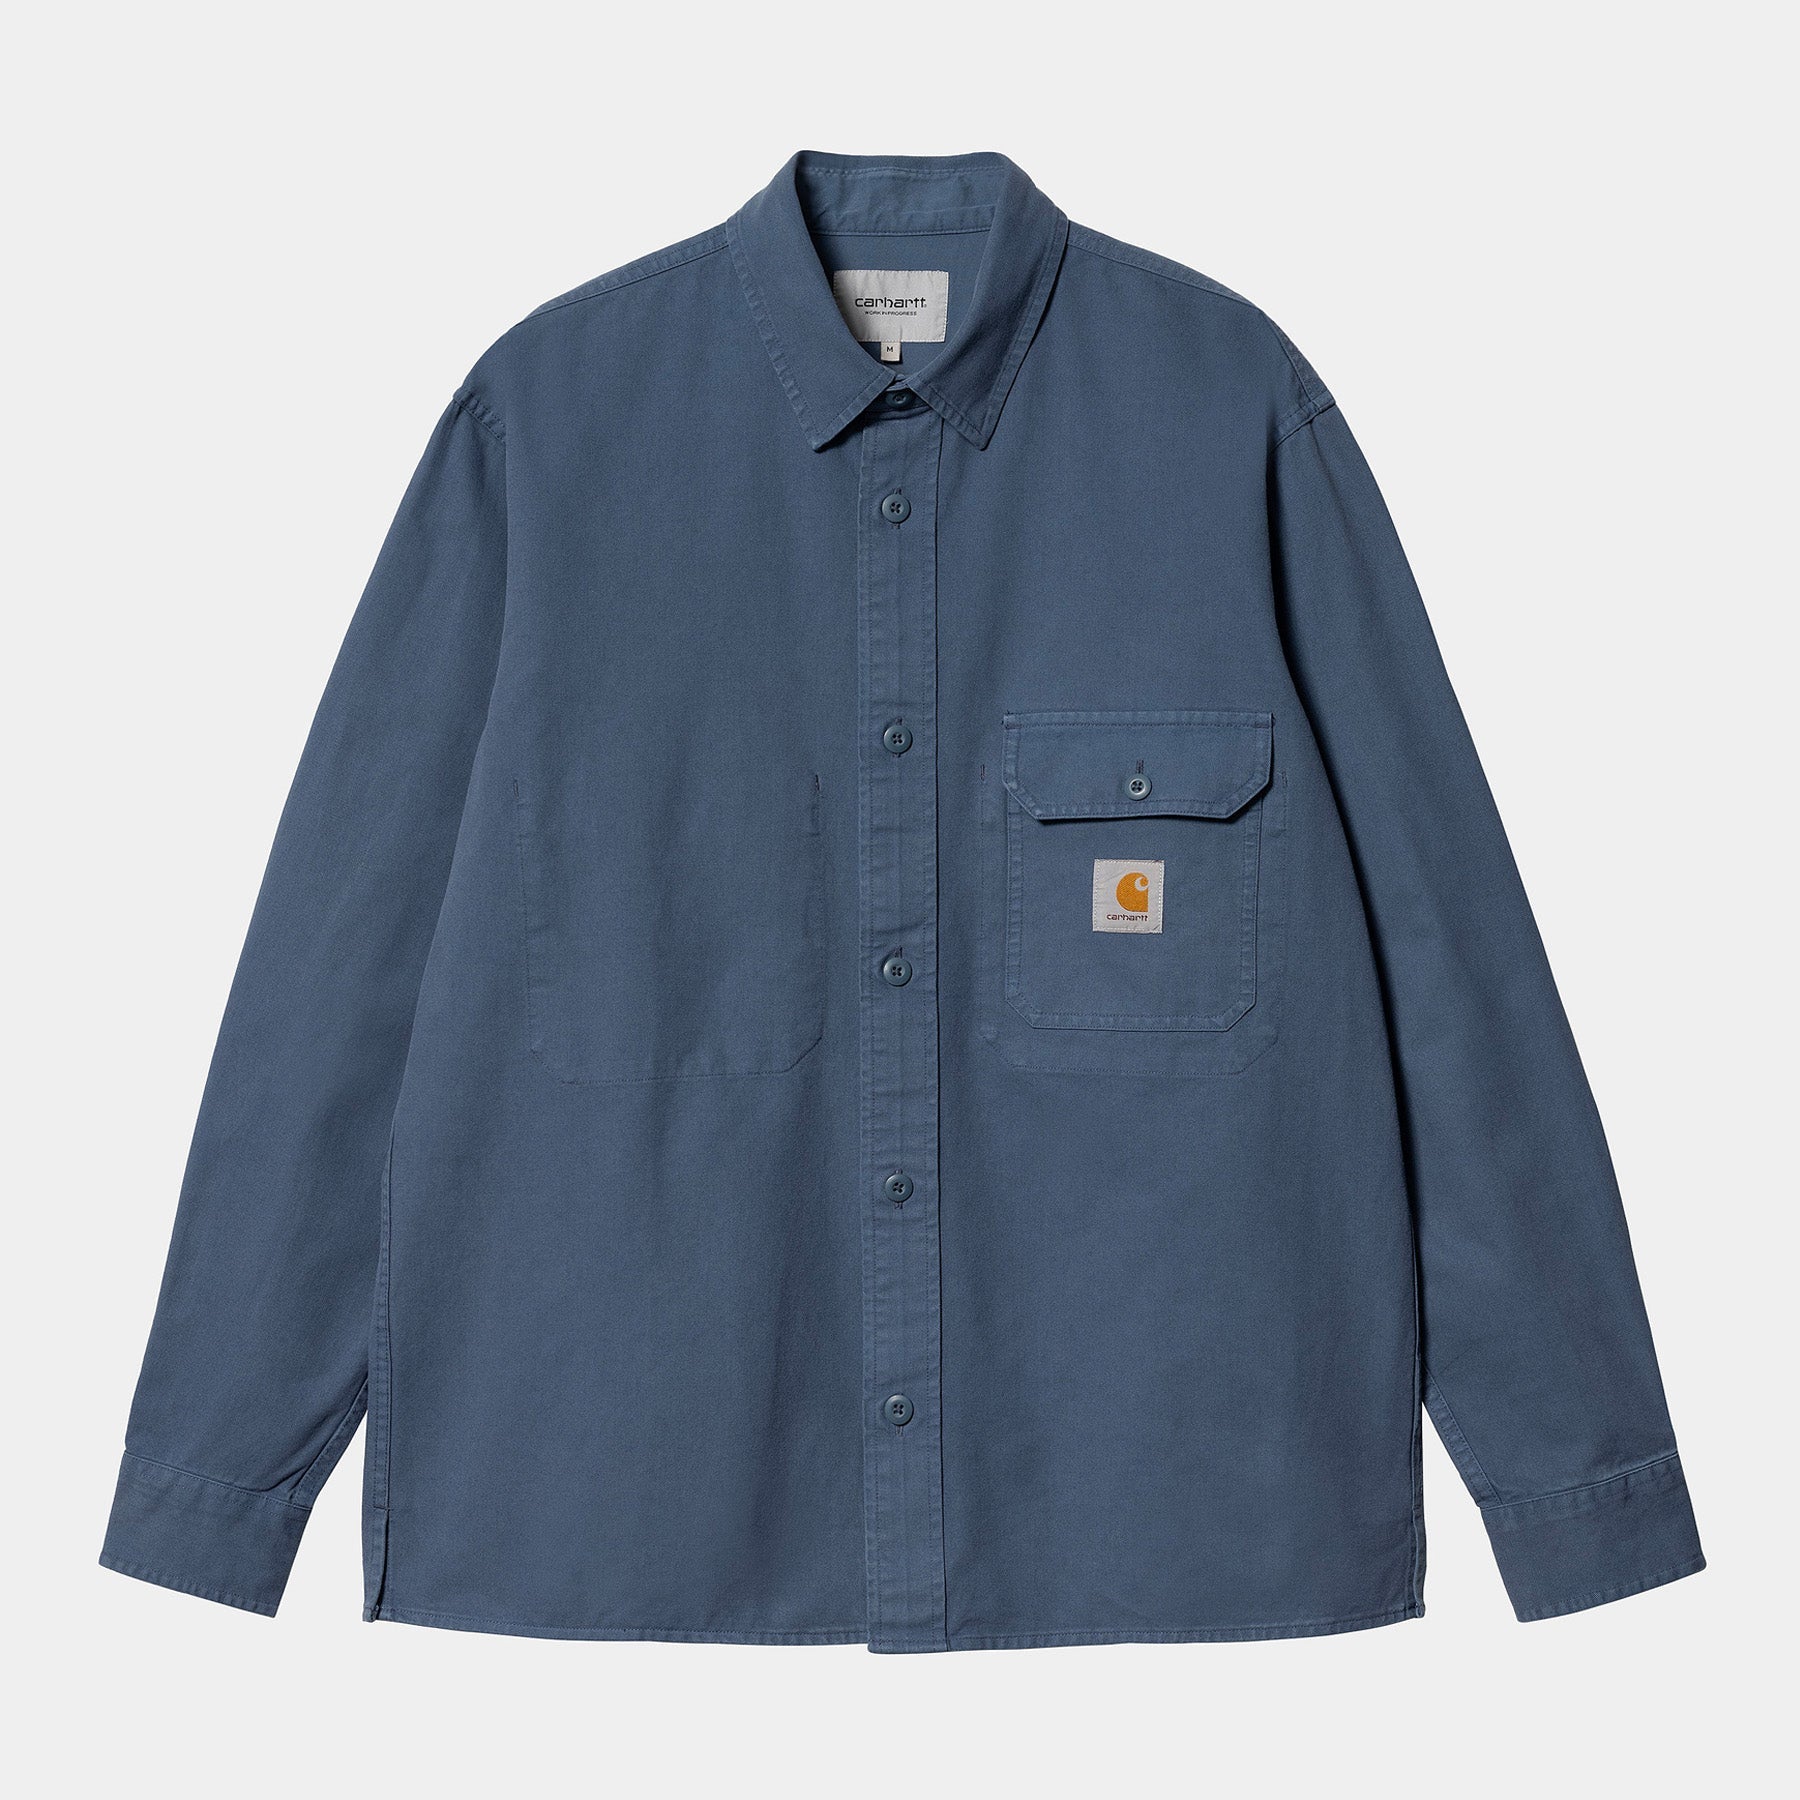 Carhartt WIP Storm Blue Reno Shirt Jacket